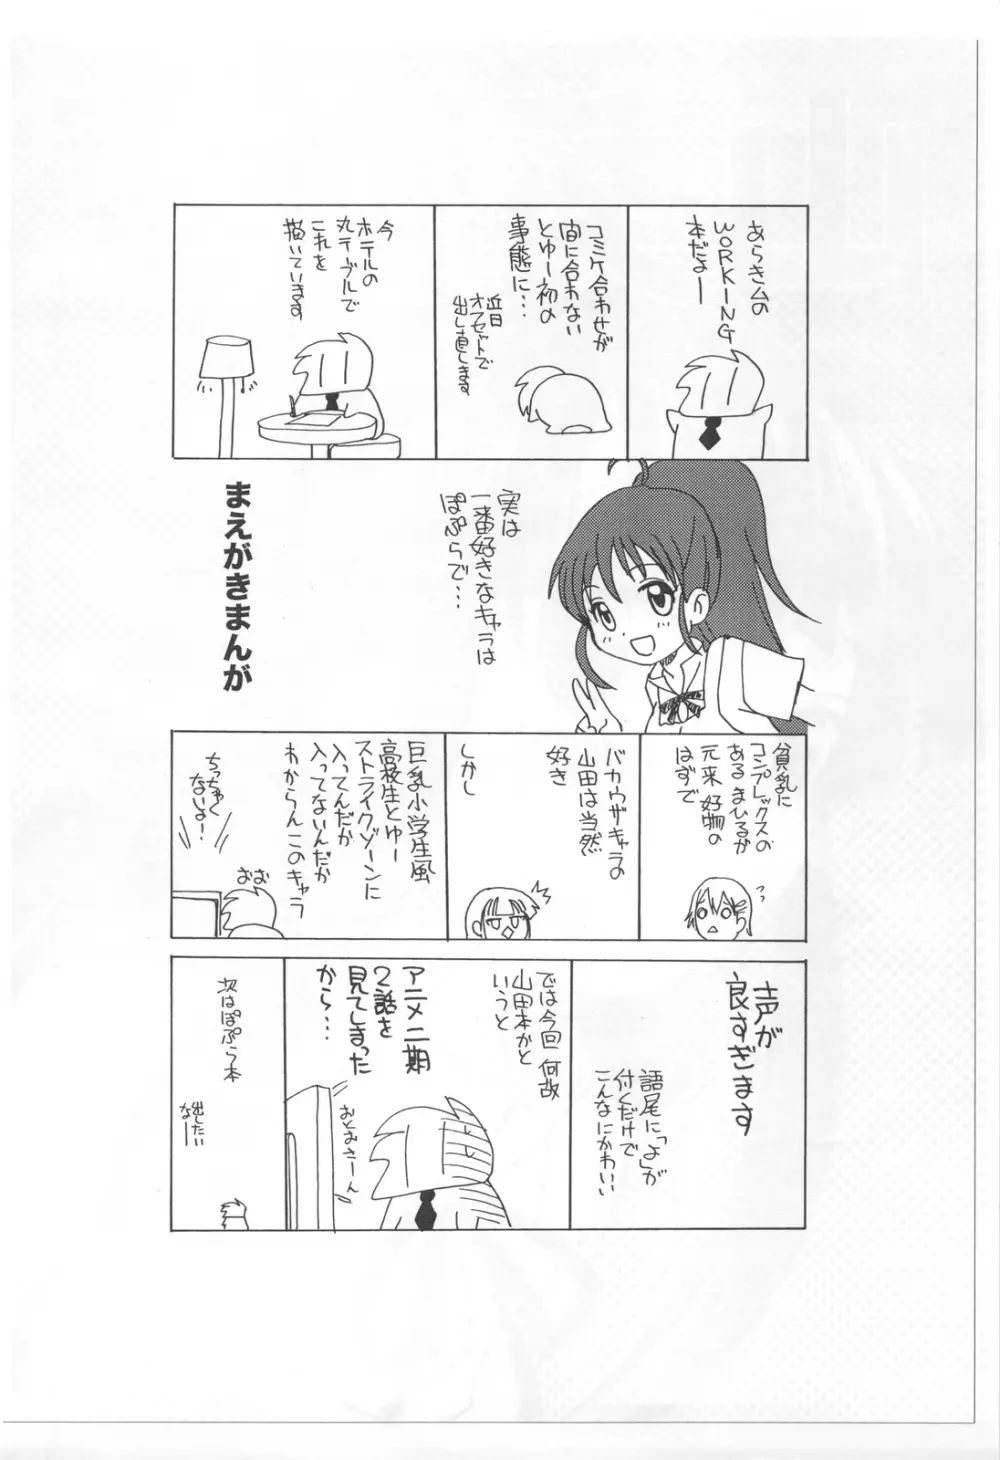 山葵納豆 - page3